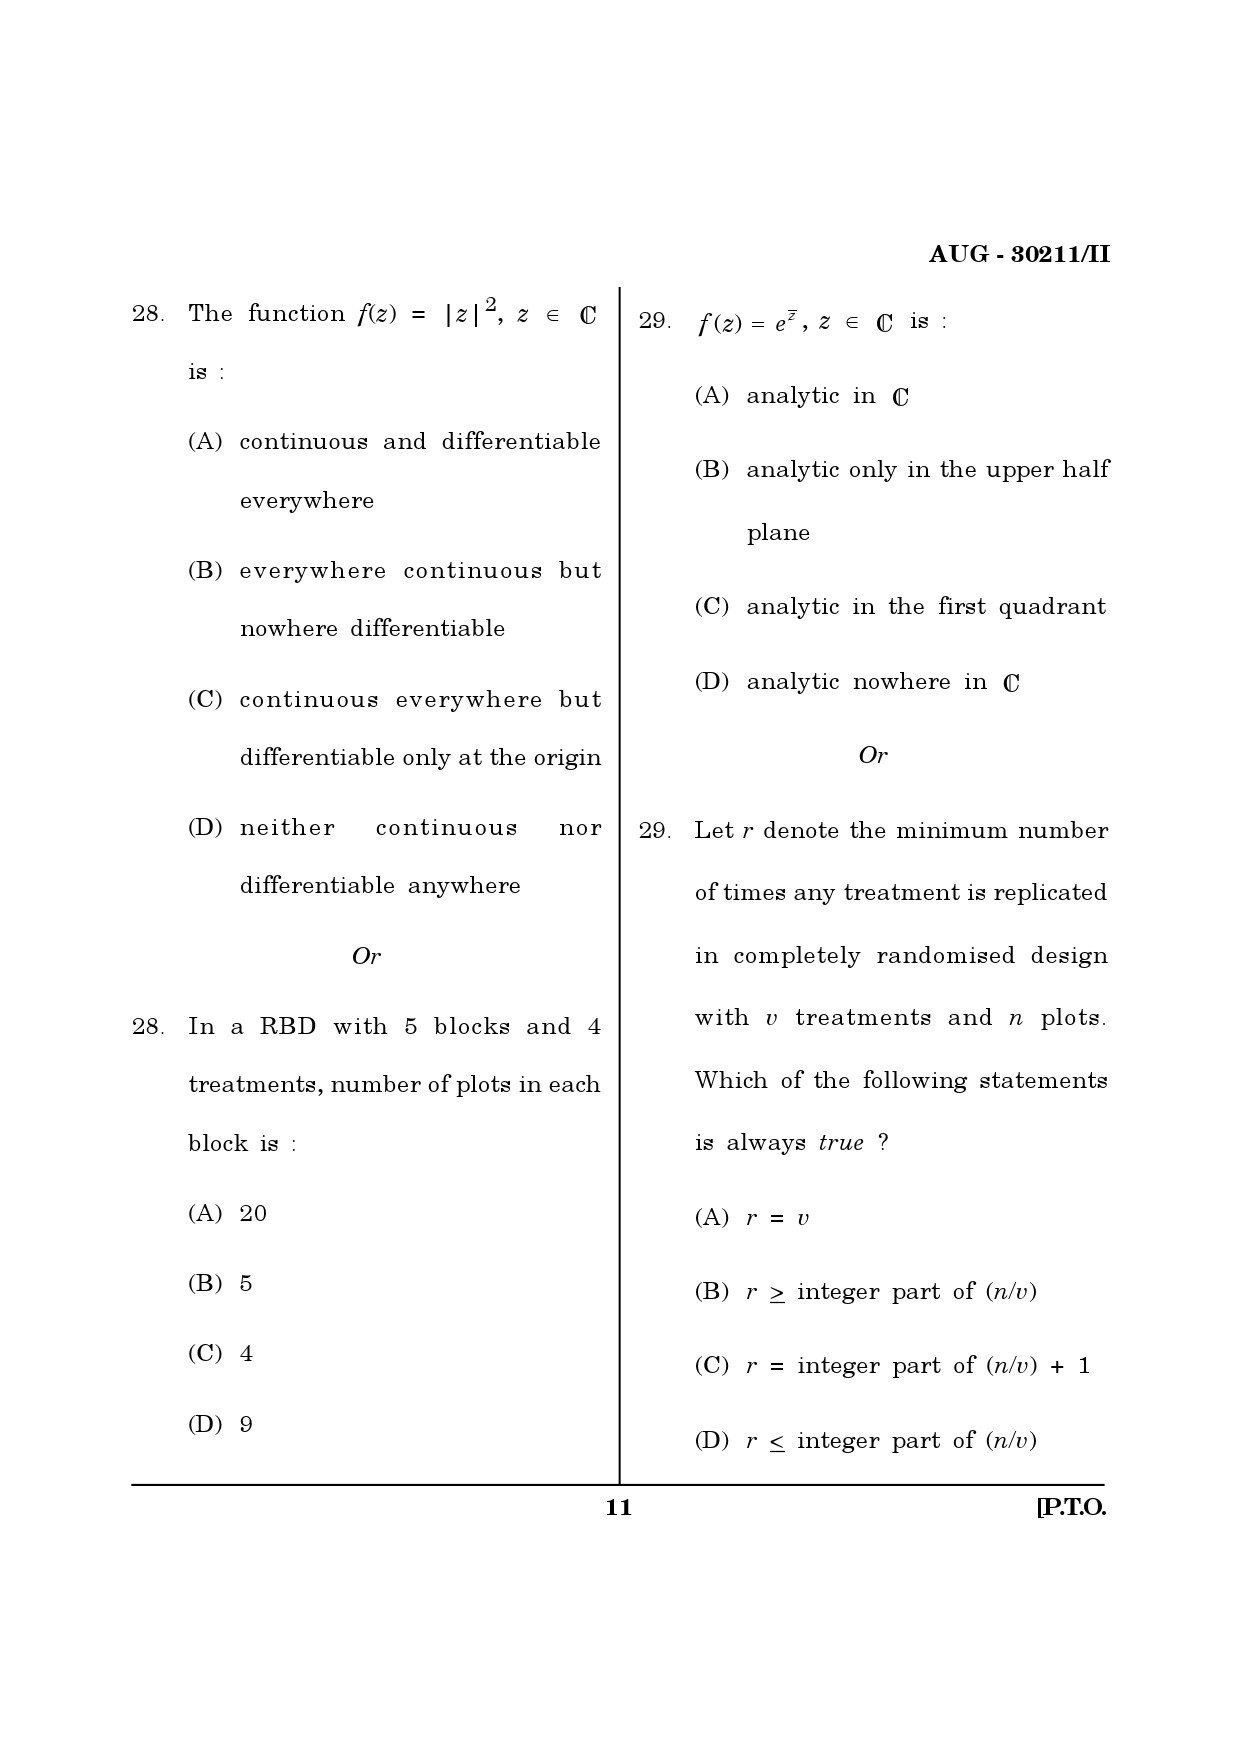 Maharashtra SET Mathematical Sciences Question Paper II August 2011 11